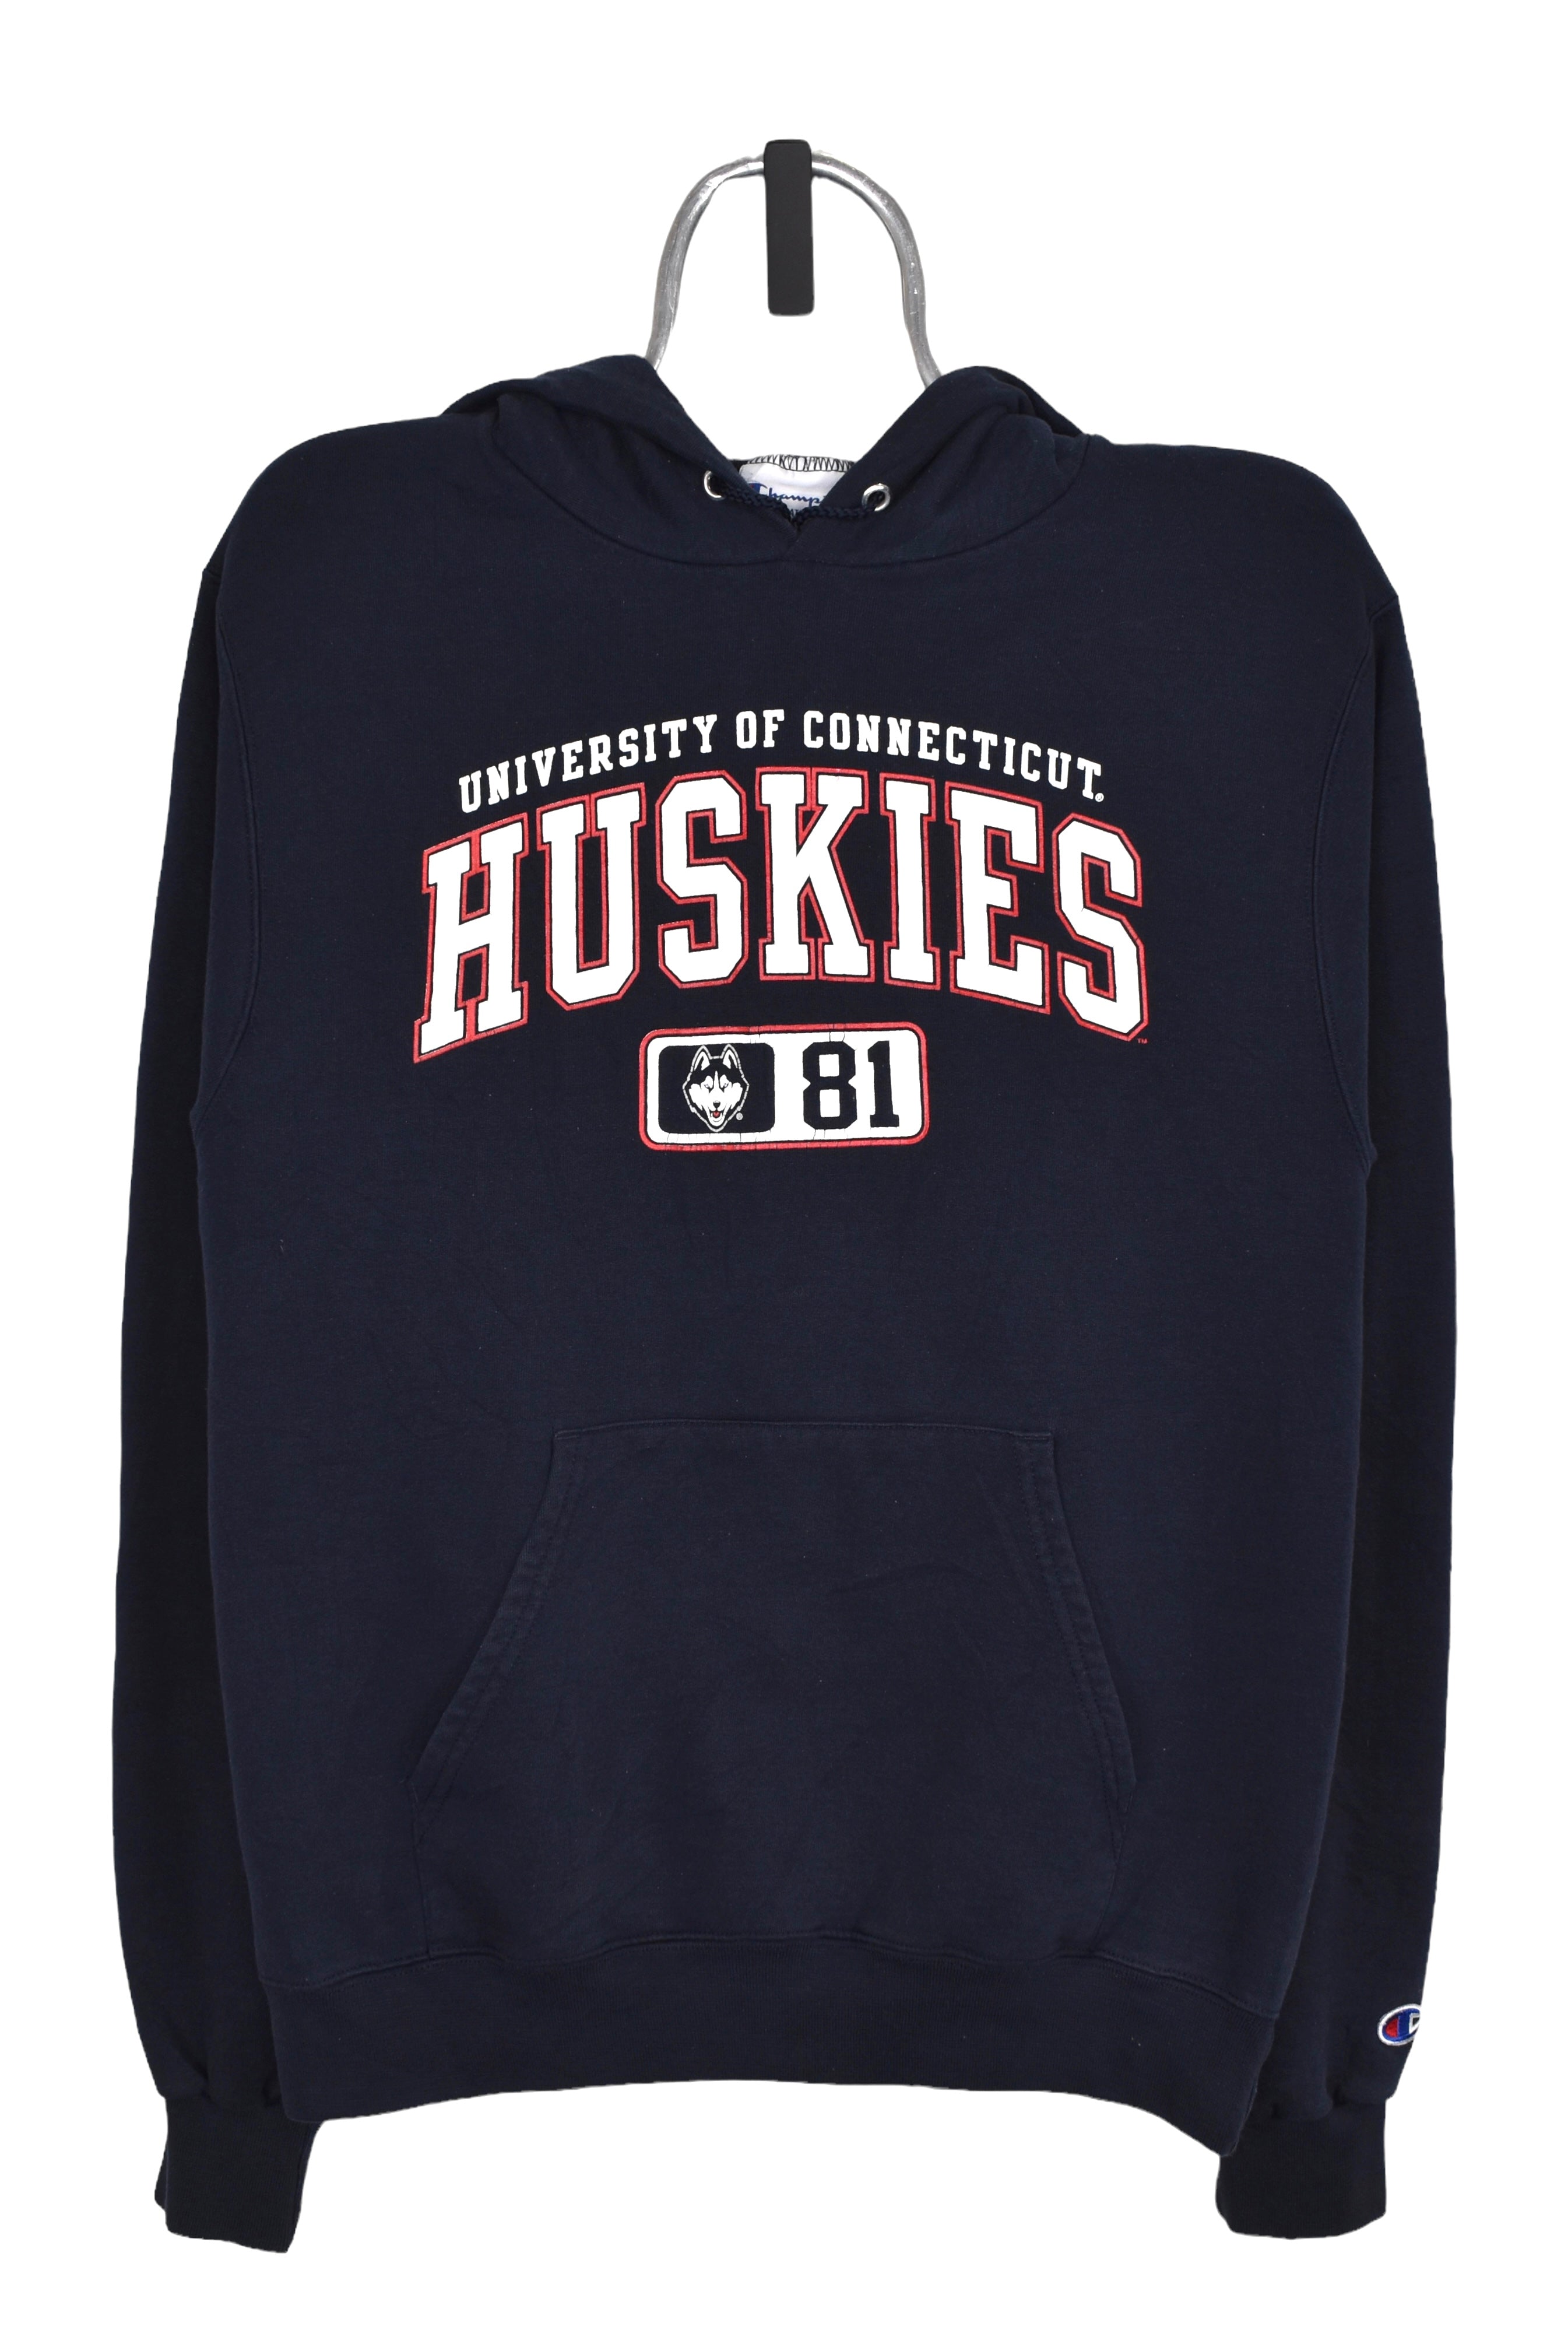 Vintage University of Connecticut hoodie (S), navy graphic sweatshirt